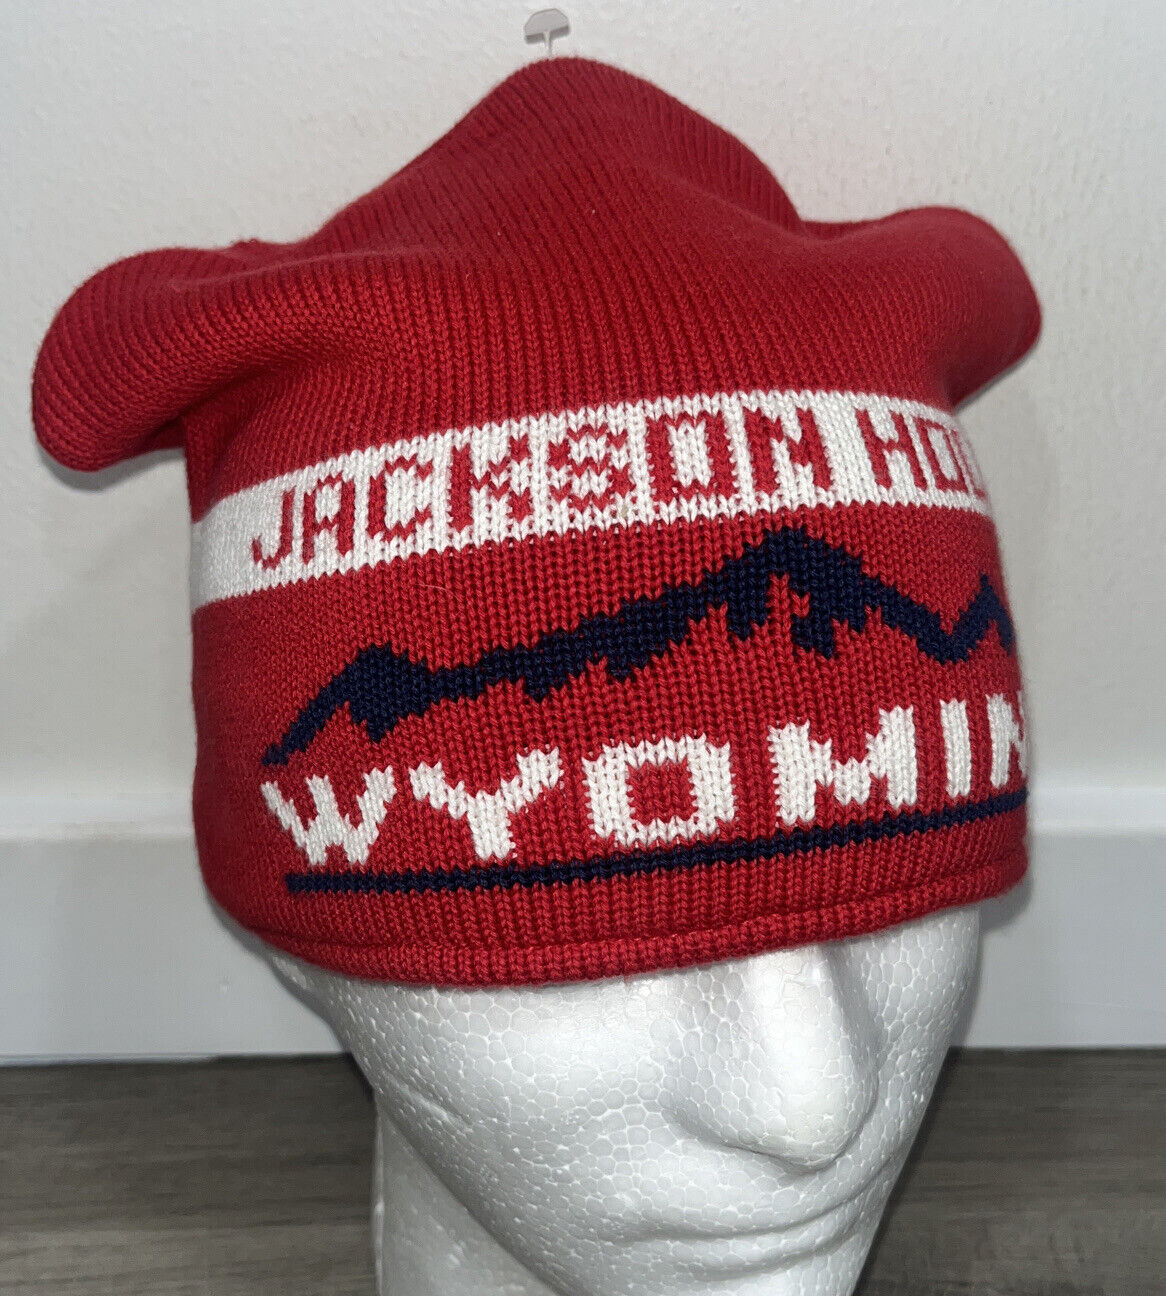 Jackson Hole Wyoming Wool Gap Kids Sz. Large Winter Knit Beanie Hat Red